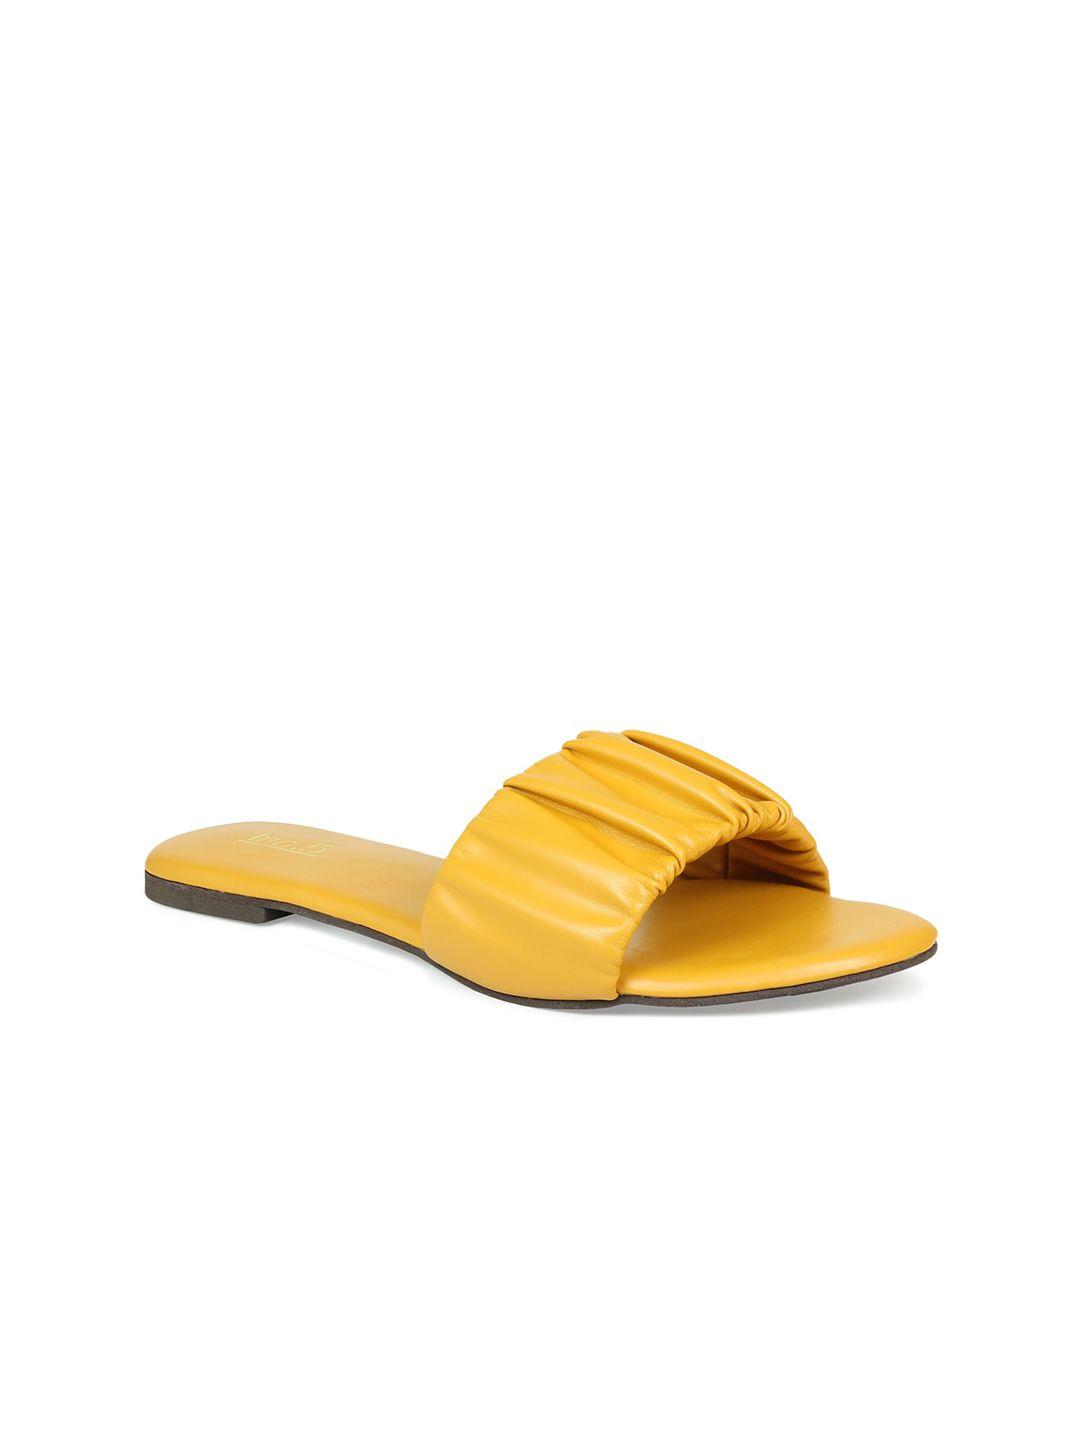 inc 5 women mustard yellow open toe flats